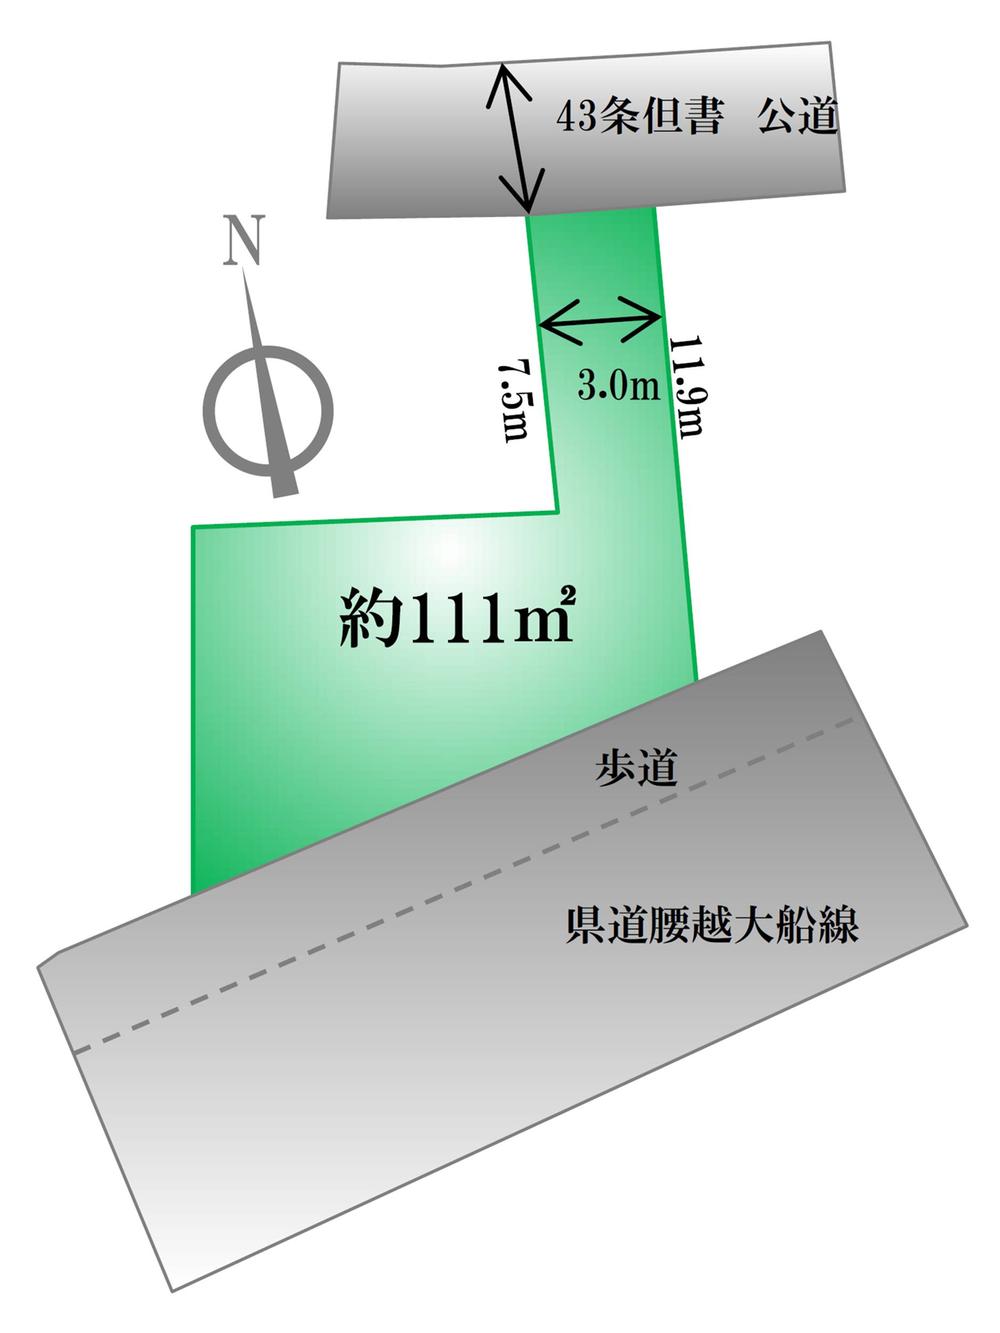 Compartment figure. Land price 24.5 million yen, Land area 111 sq m